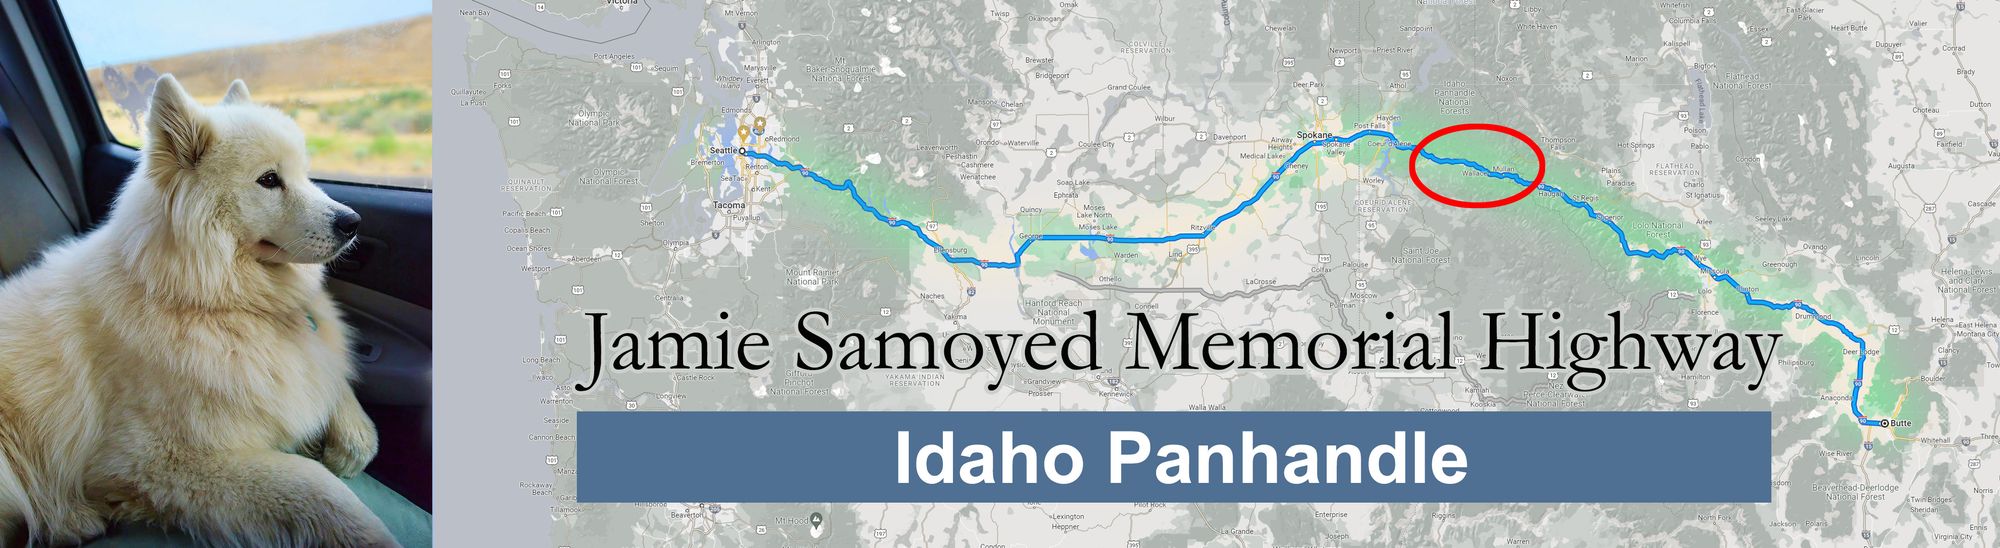 Idaho Panhandle